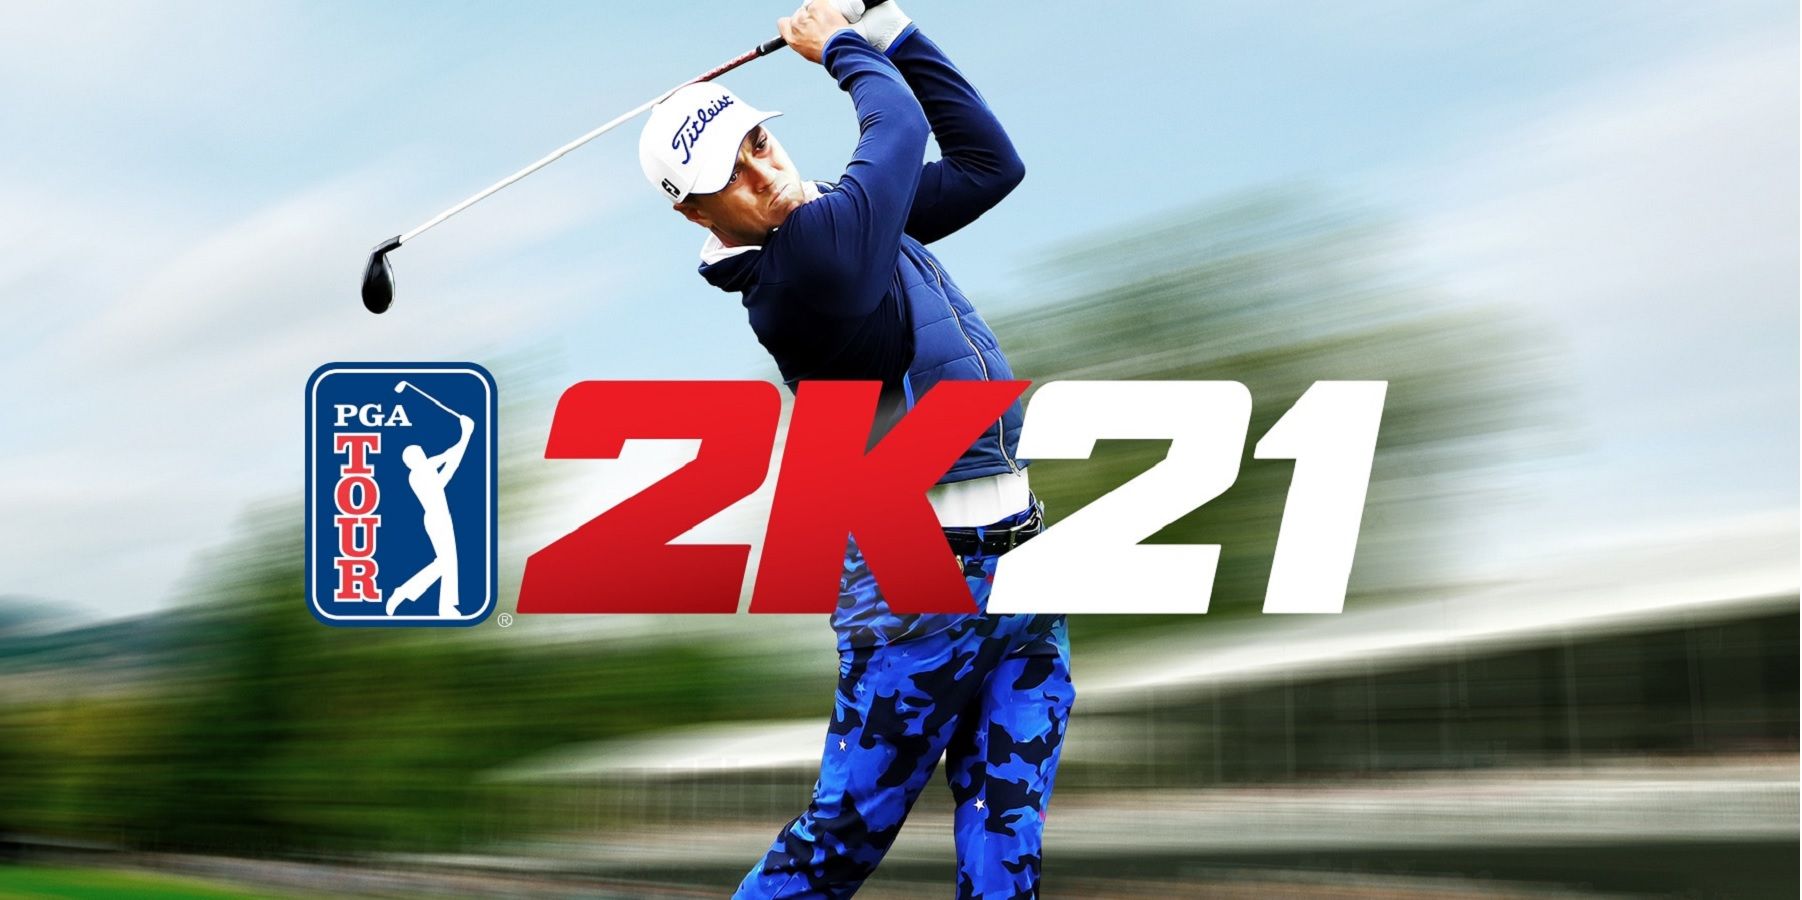 PGA Tour 2K21 header image with screenshot and logo.